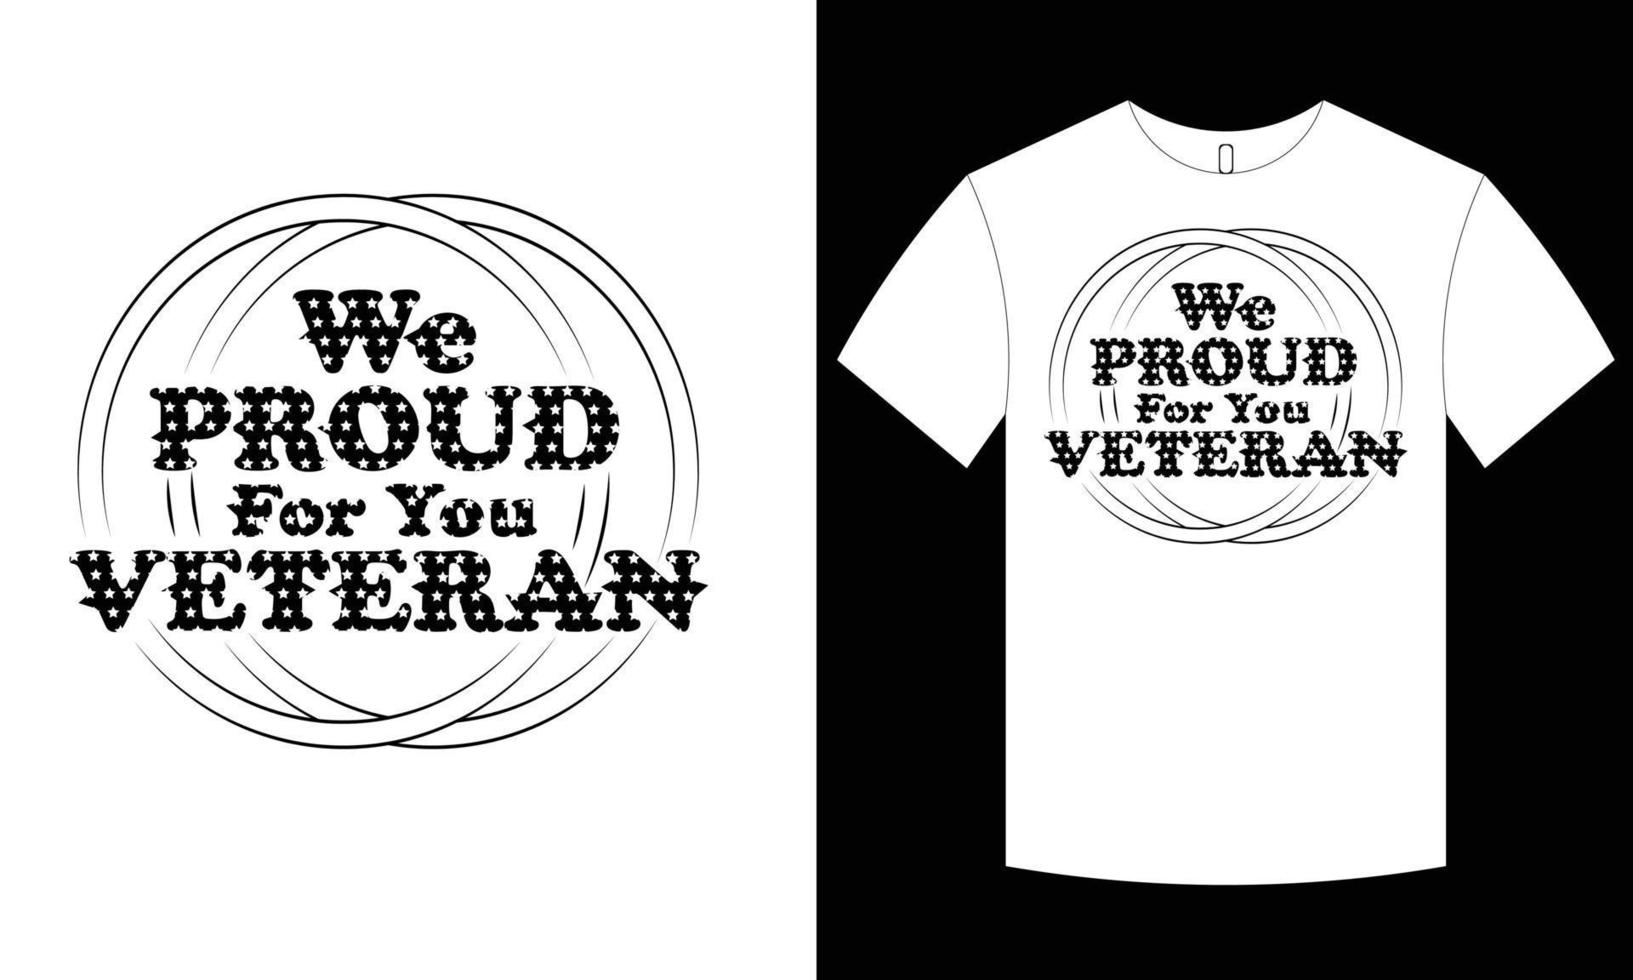 veteran t-shirt design vector